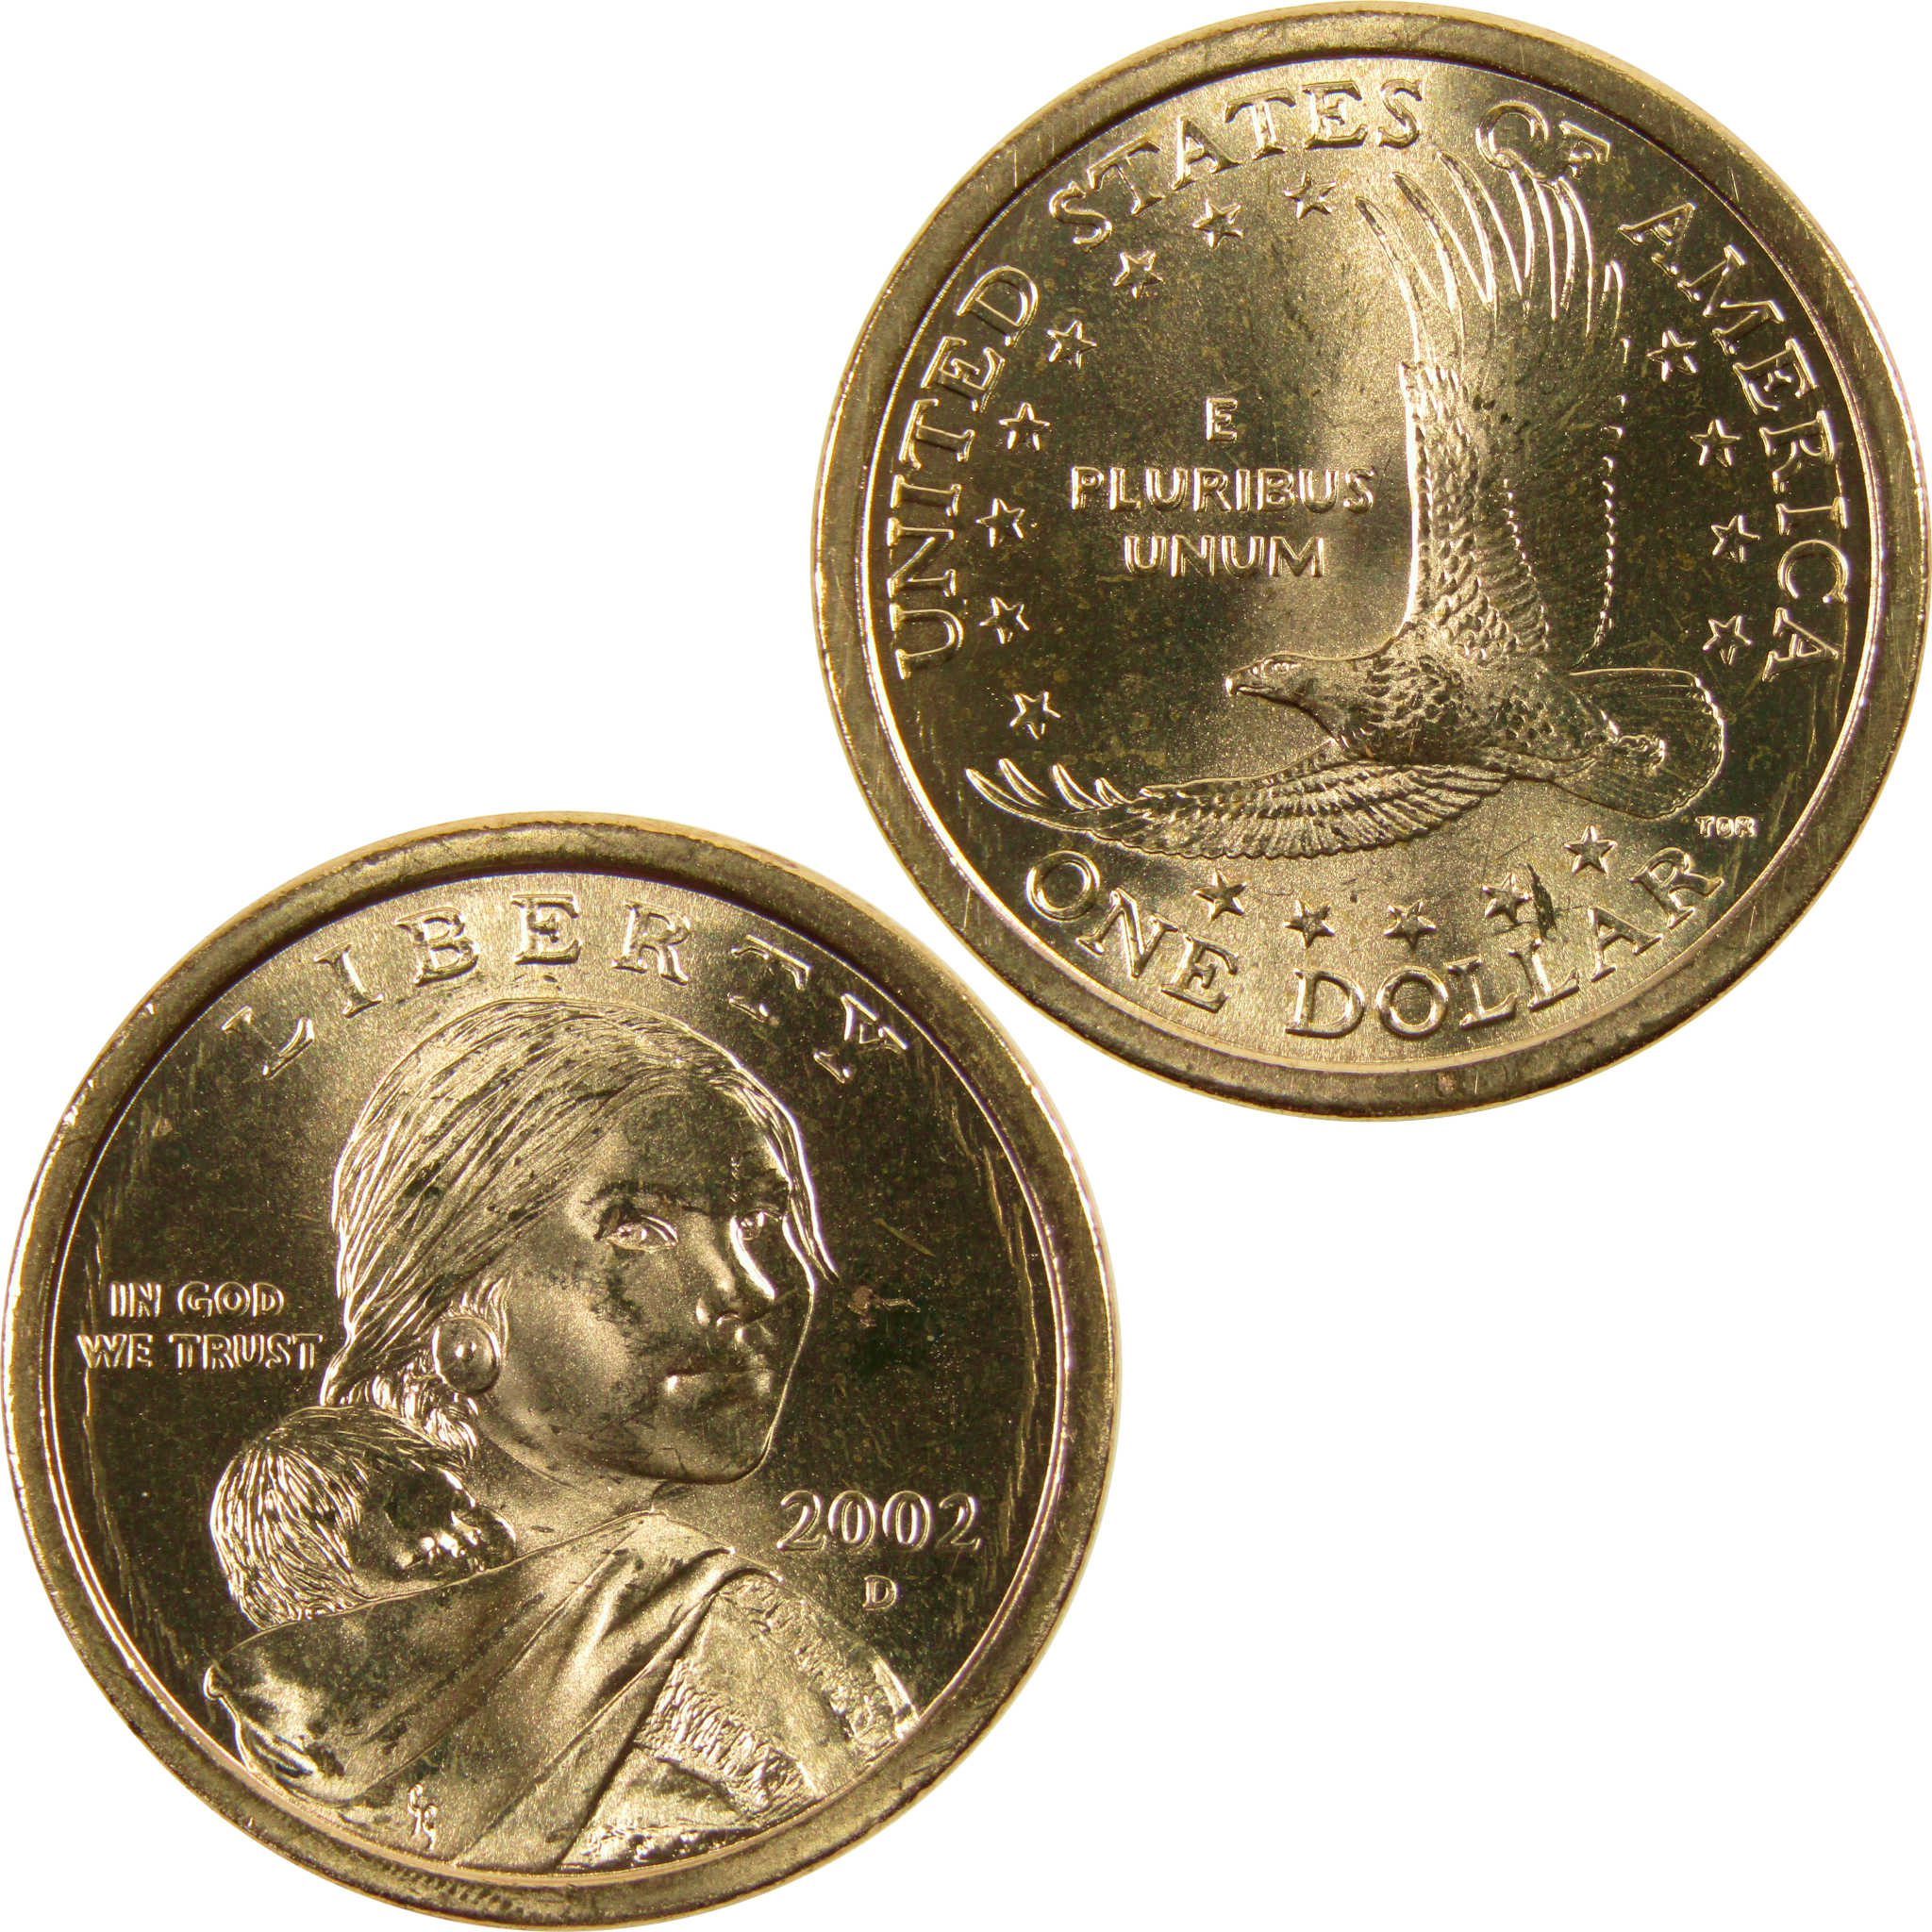 2002 D Sacagawea Native American Dollar BU Uncirculated $1 Coin